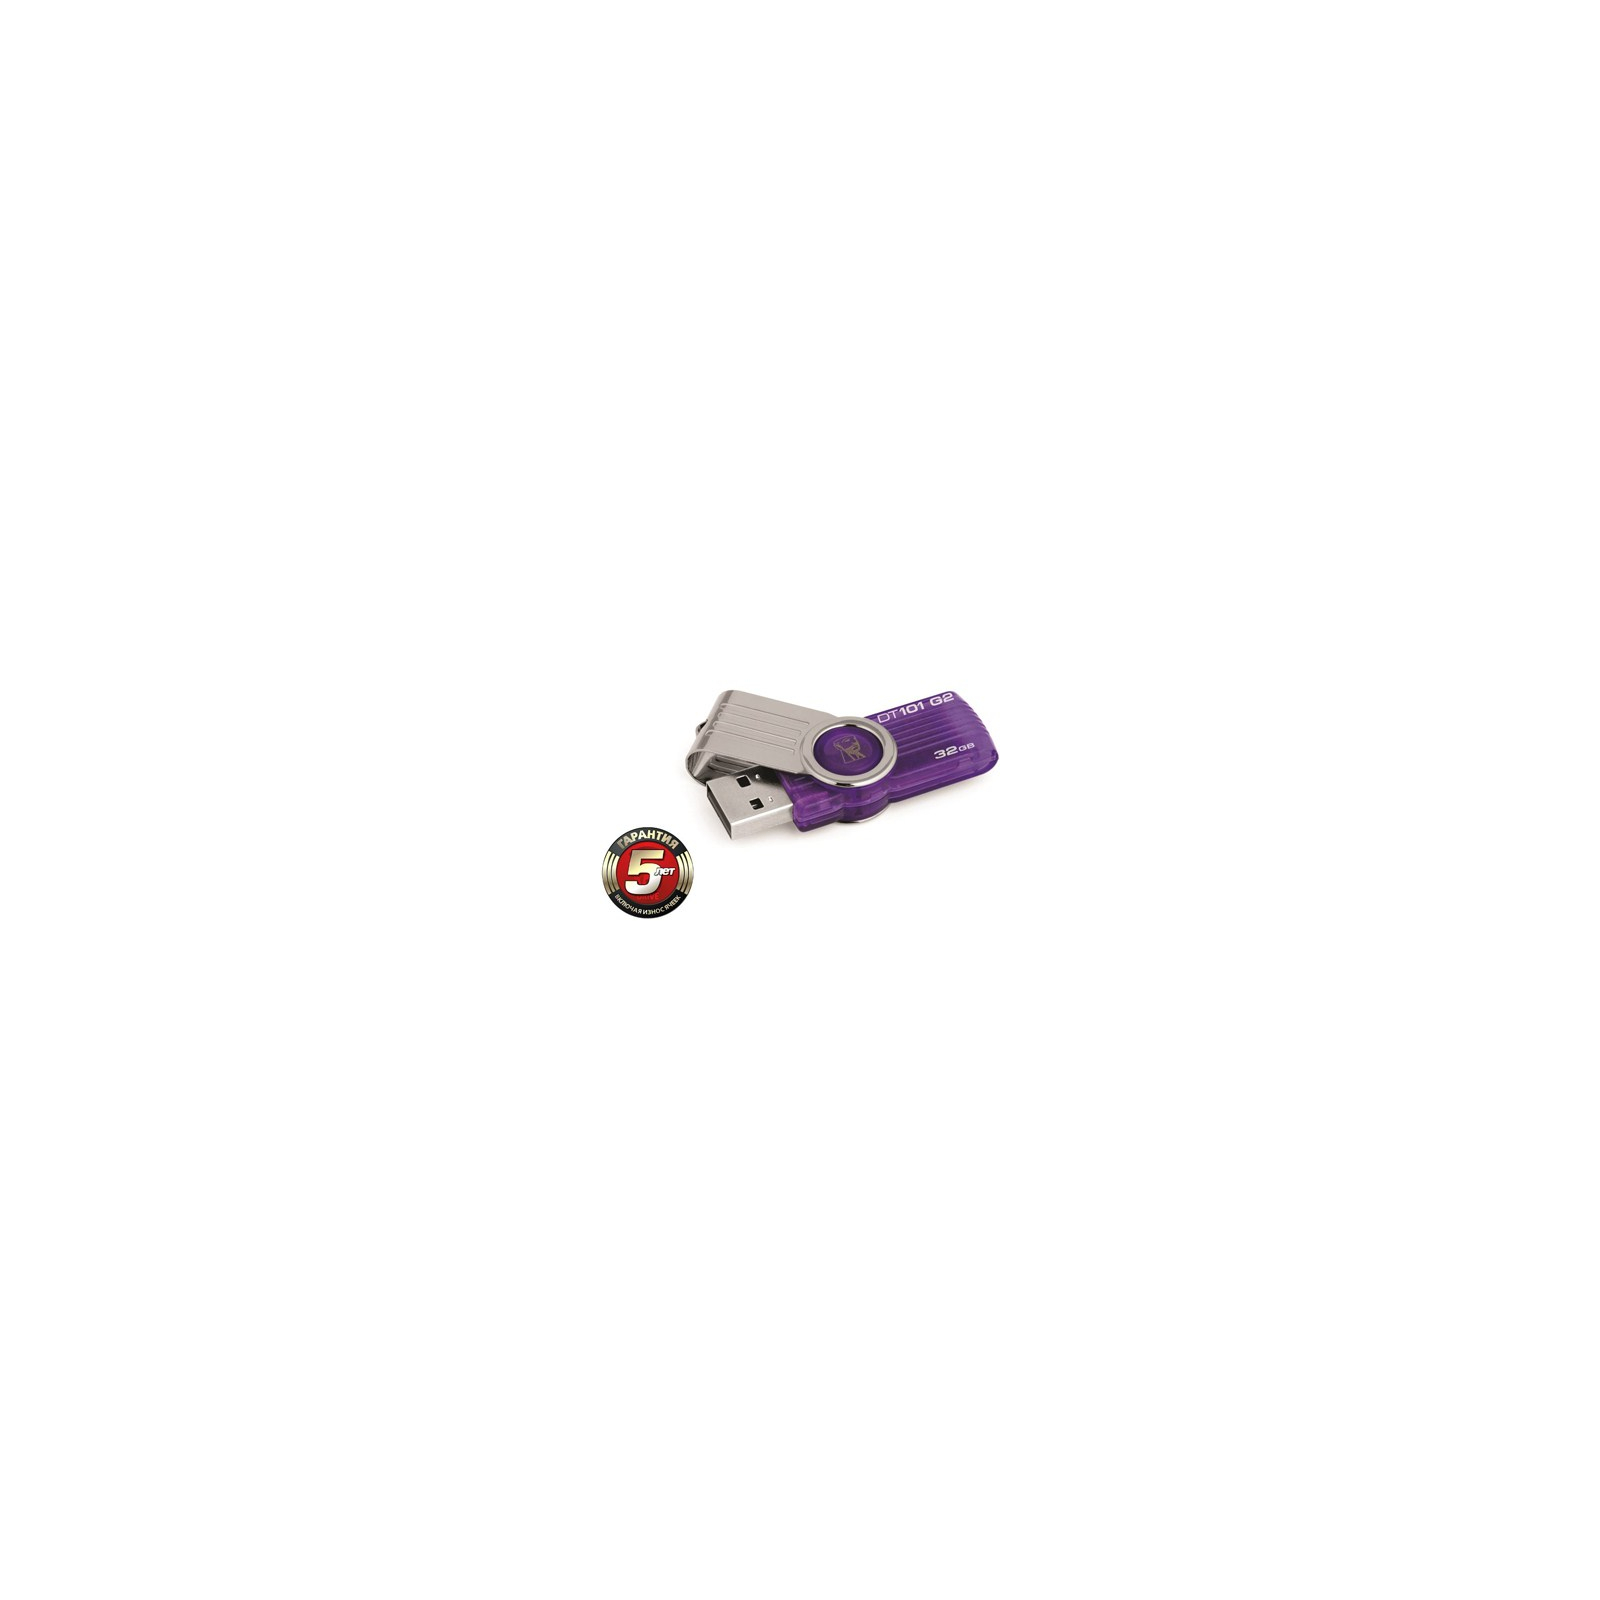 USB флеш накопитель Kingston 32Gb DataTraveler 101 G2 (DT101G2/32GB) изображение 2